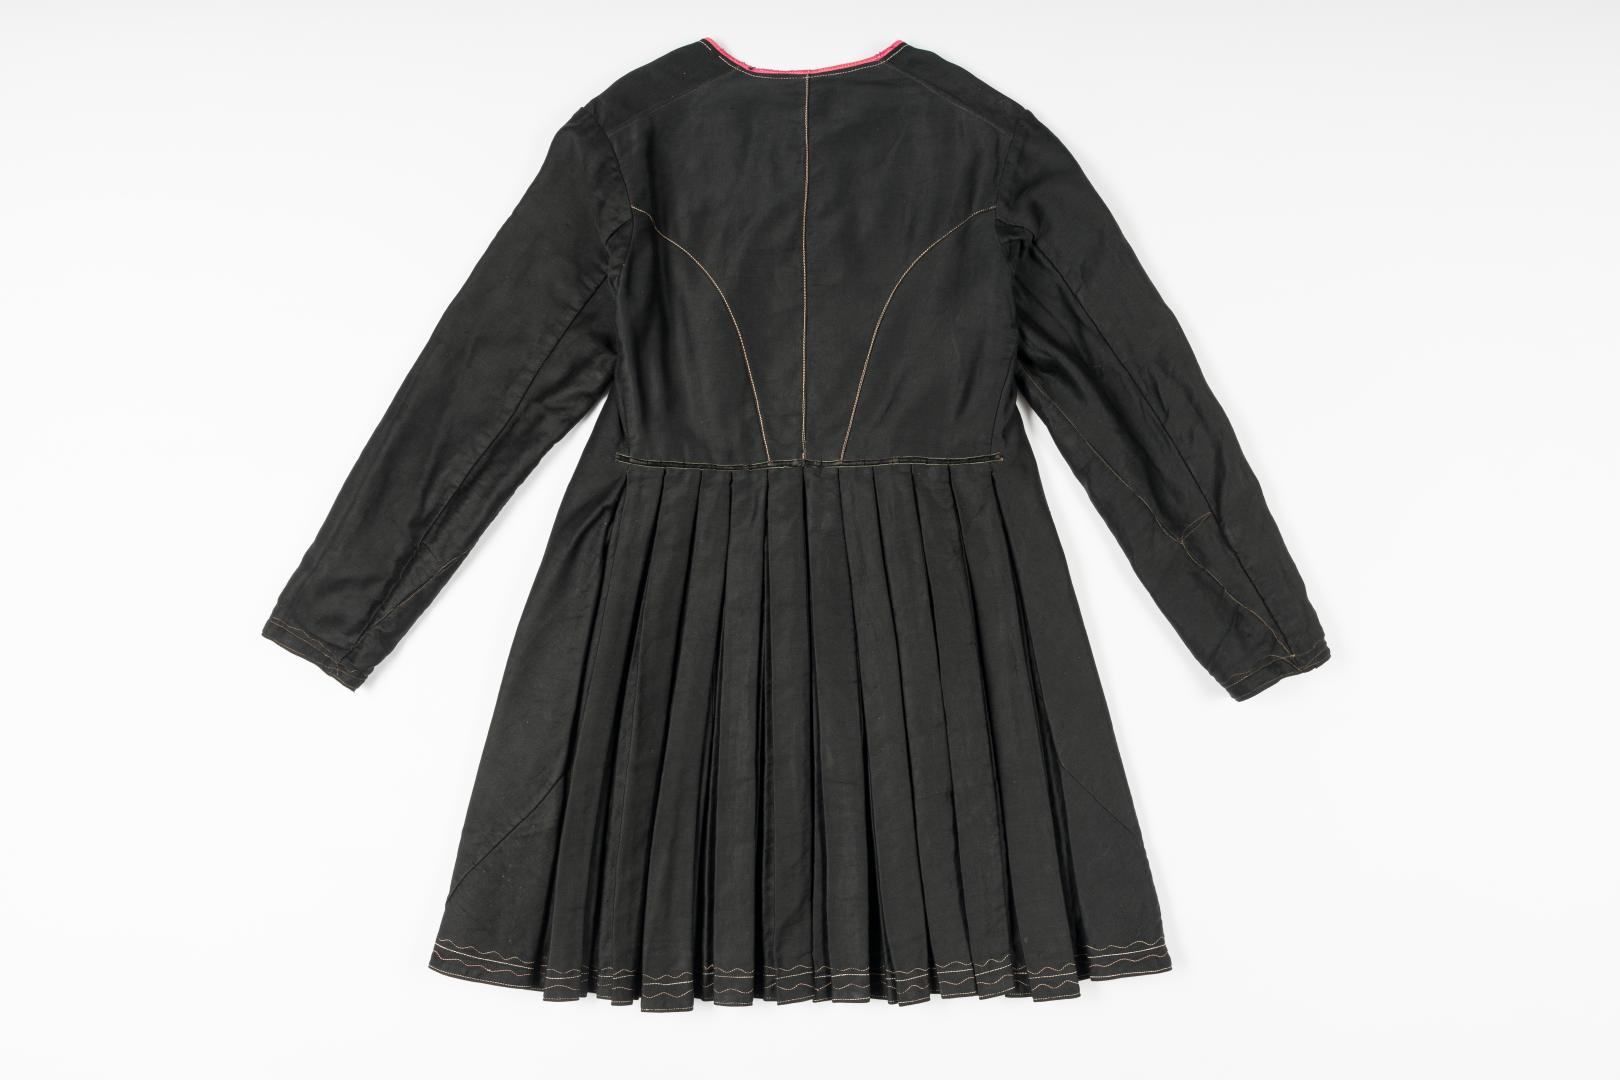 Yupka (black sateen women's overcoat)